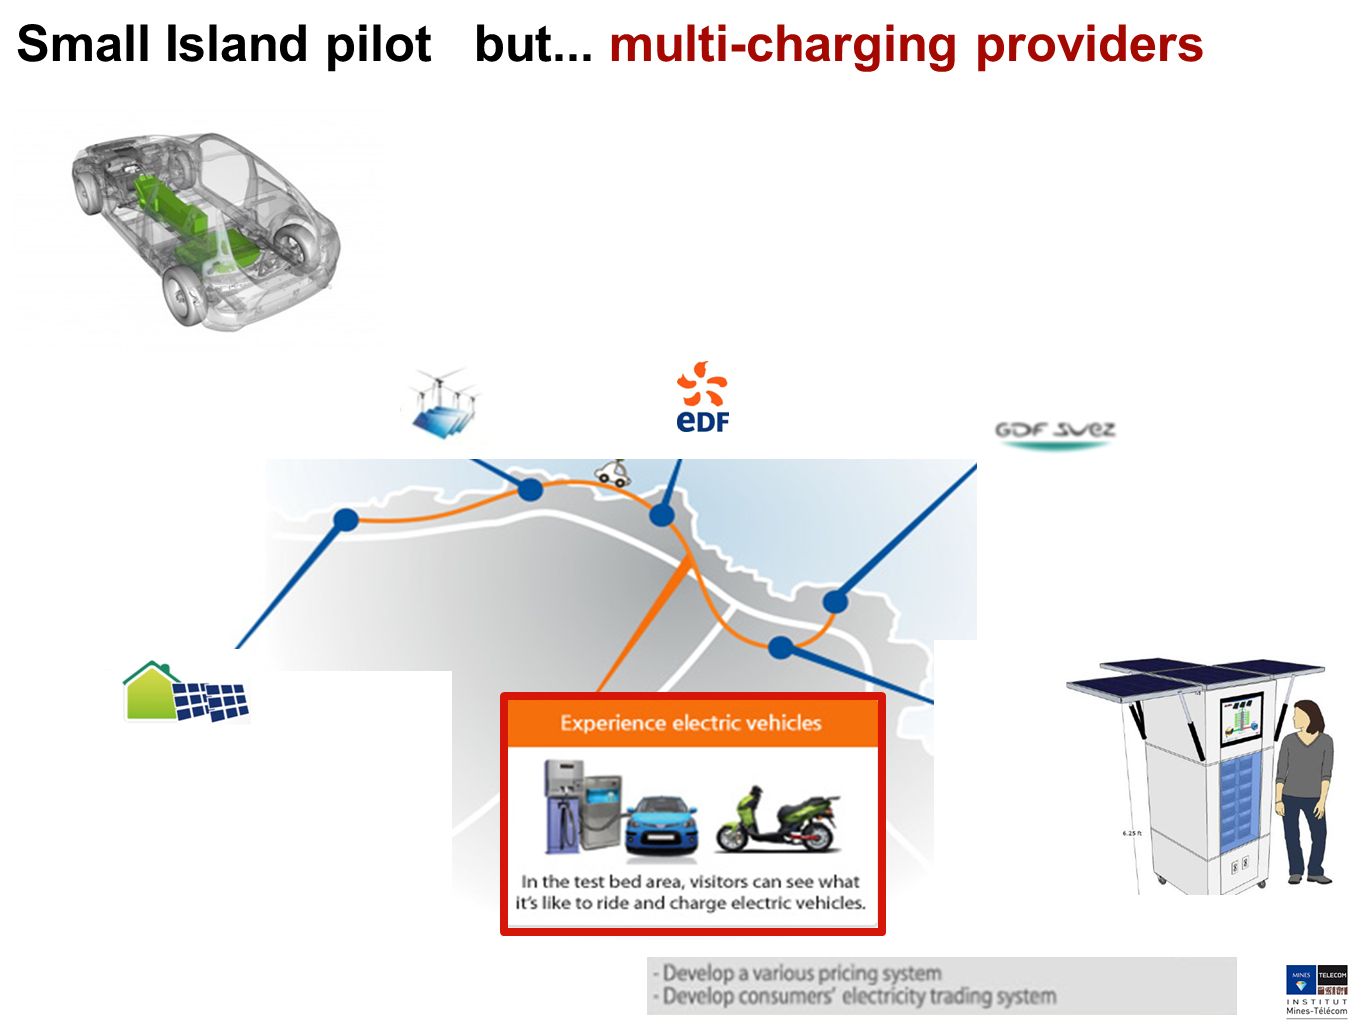 Small Island pilot but... multi-charging providers